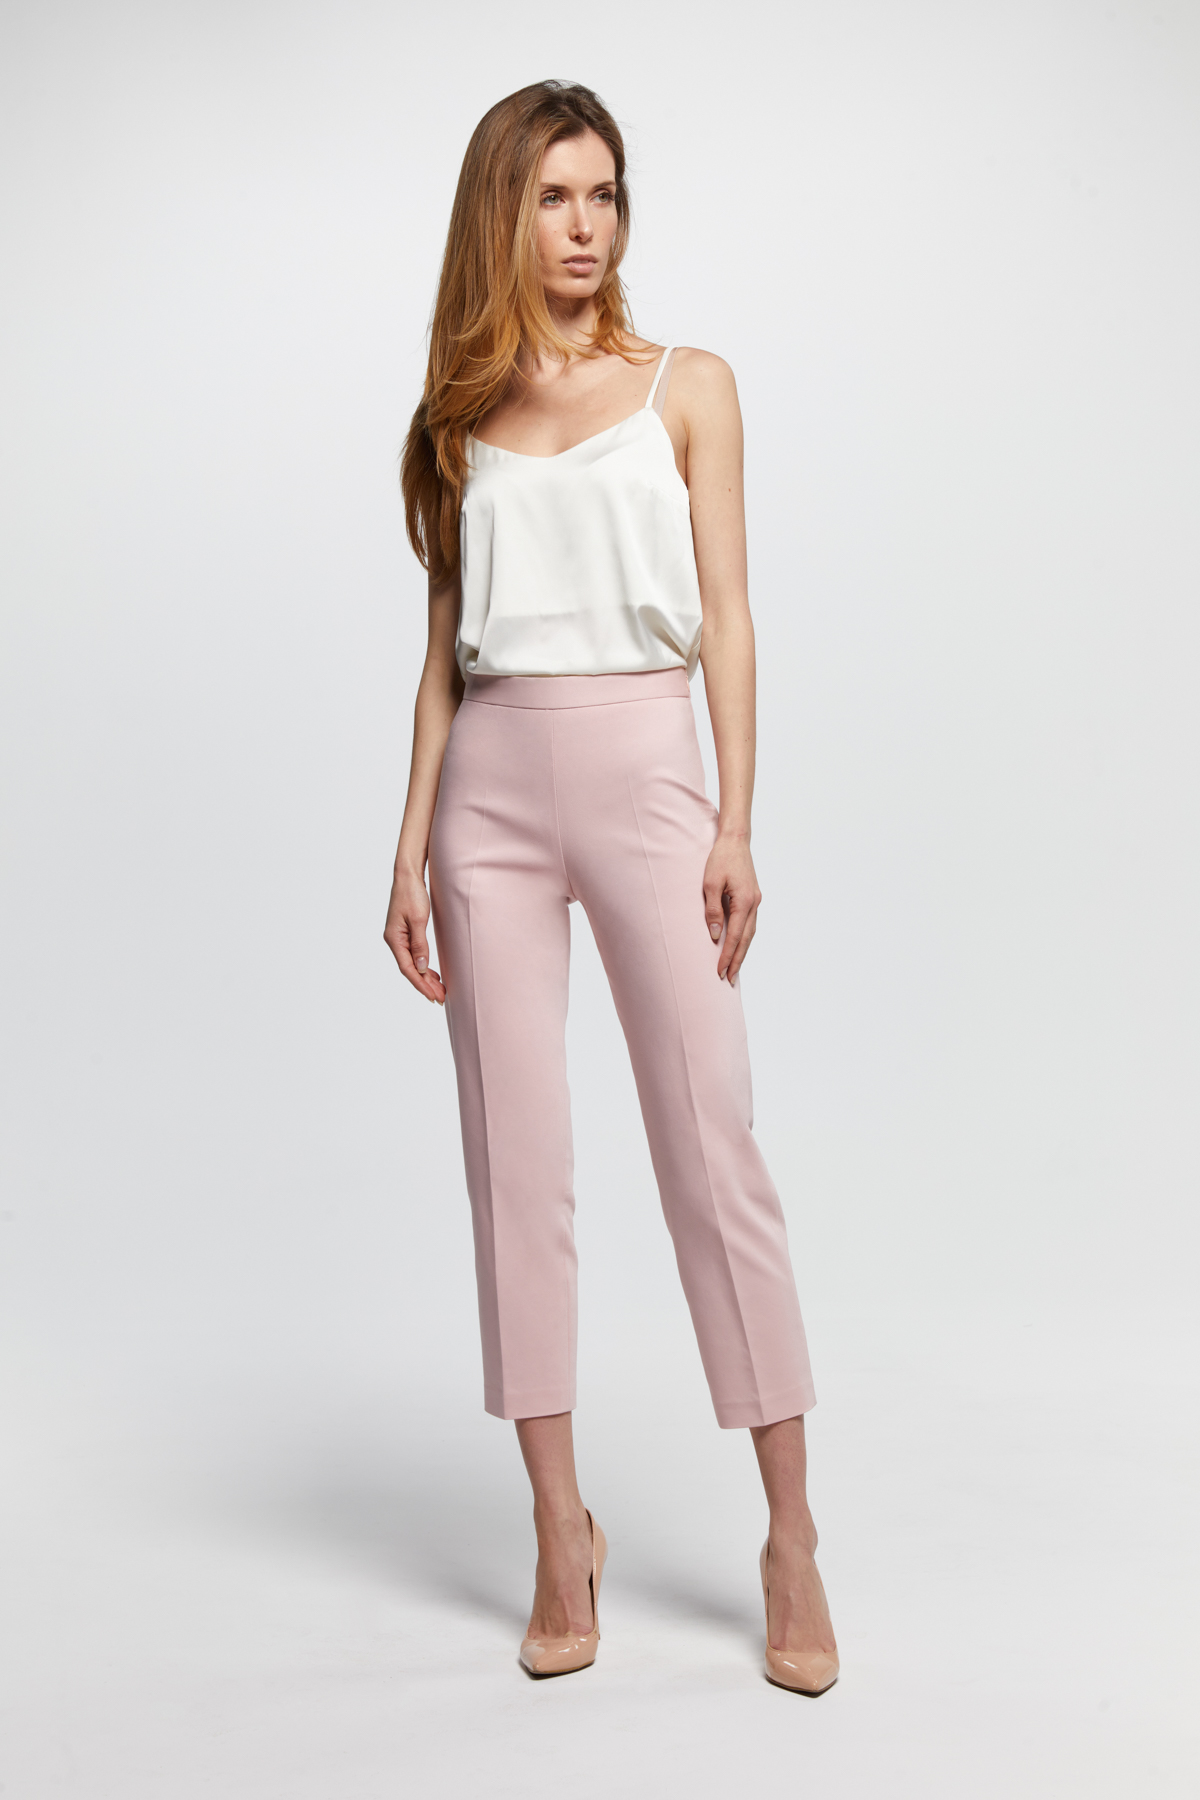 Pink Dress Pants - Beige High Waisted Pants - Trousers - Lulus